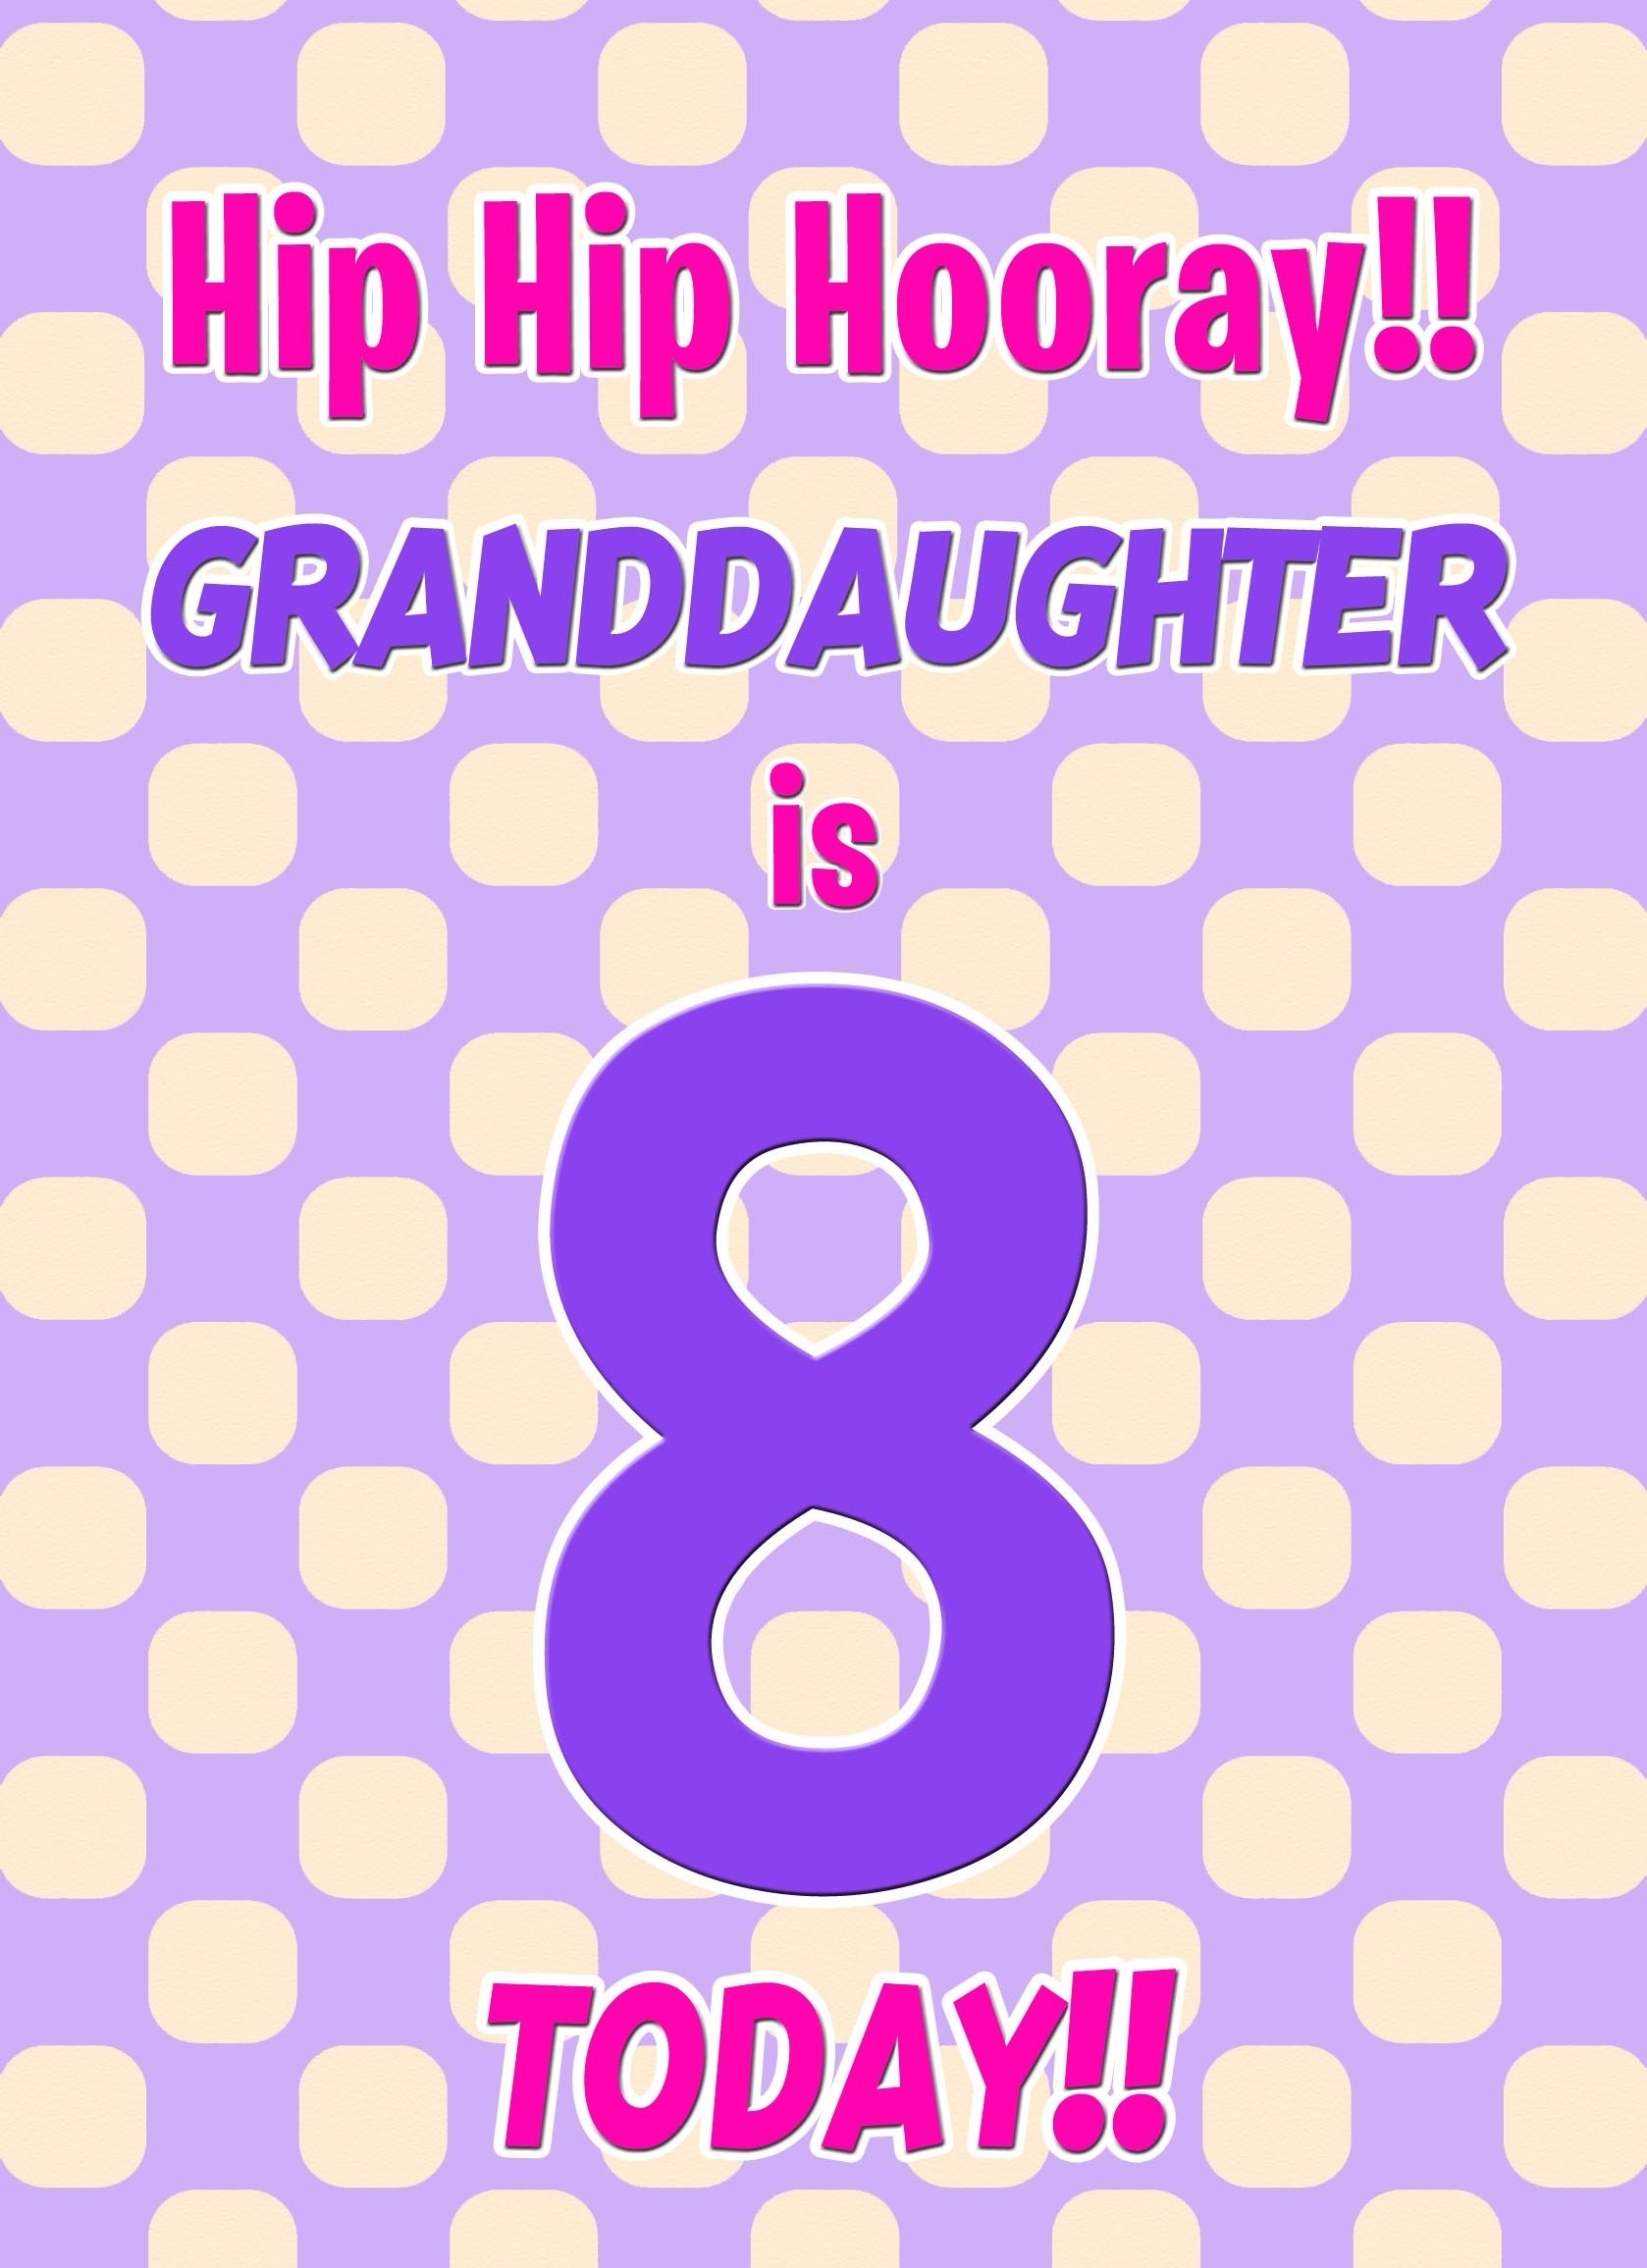 Granddaughter 8th Birthday Card (Purple Spots)